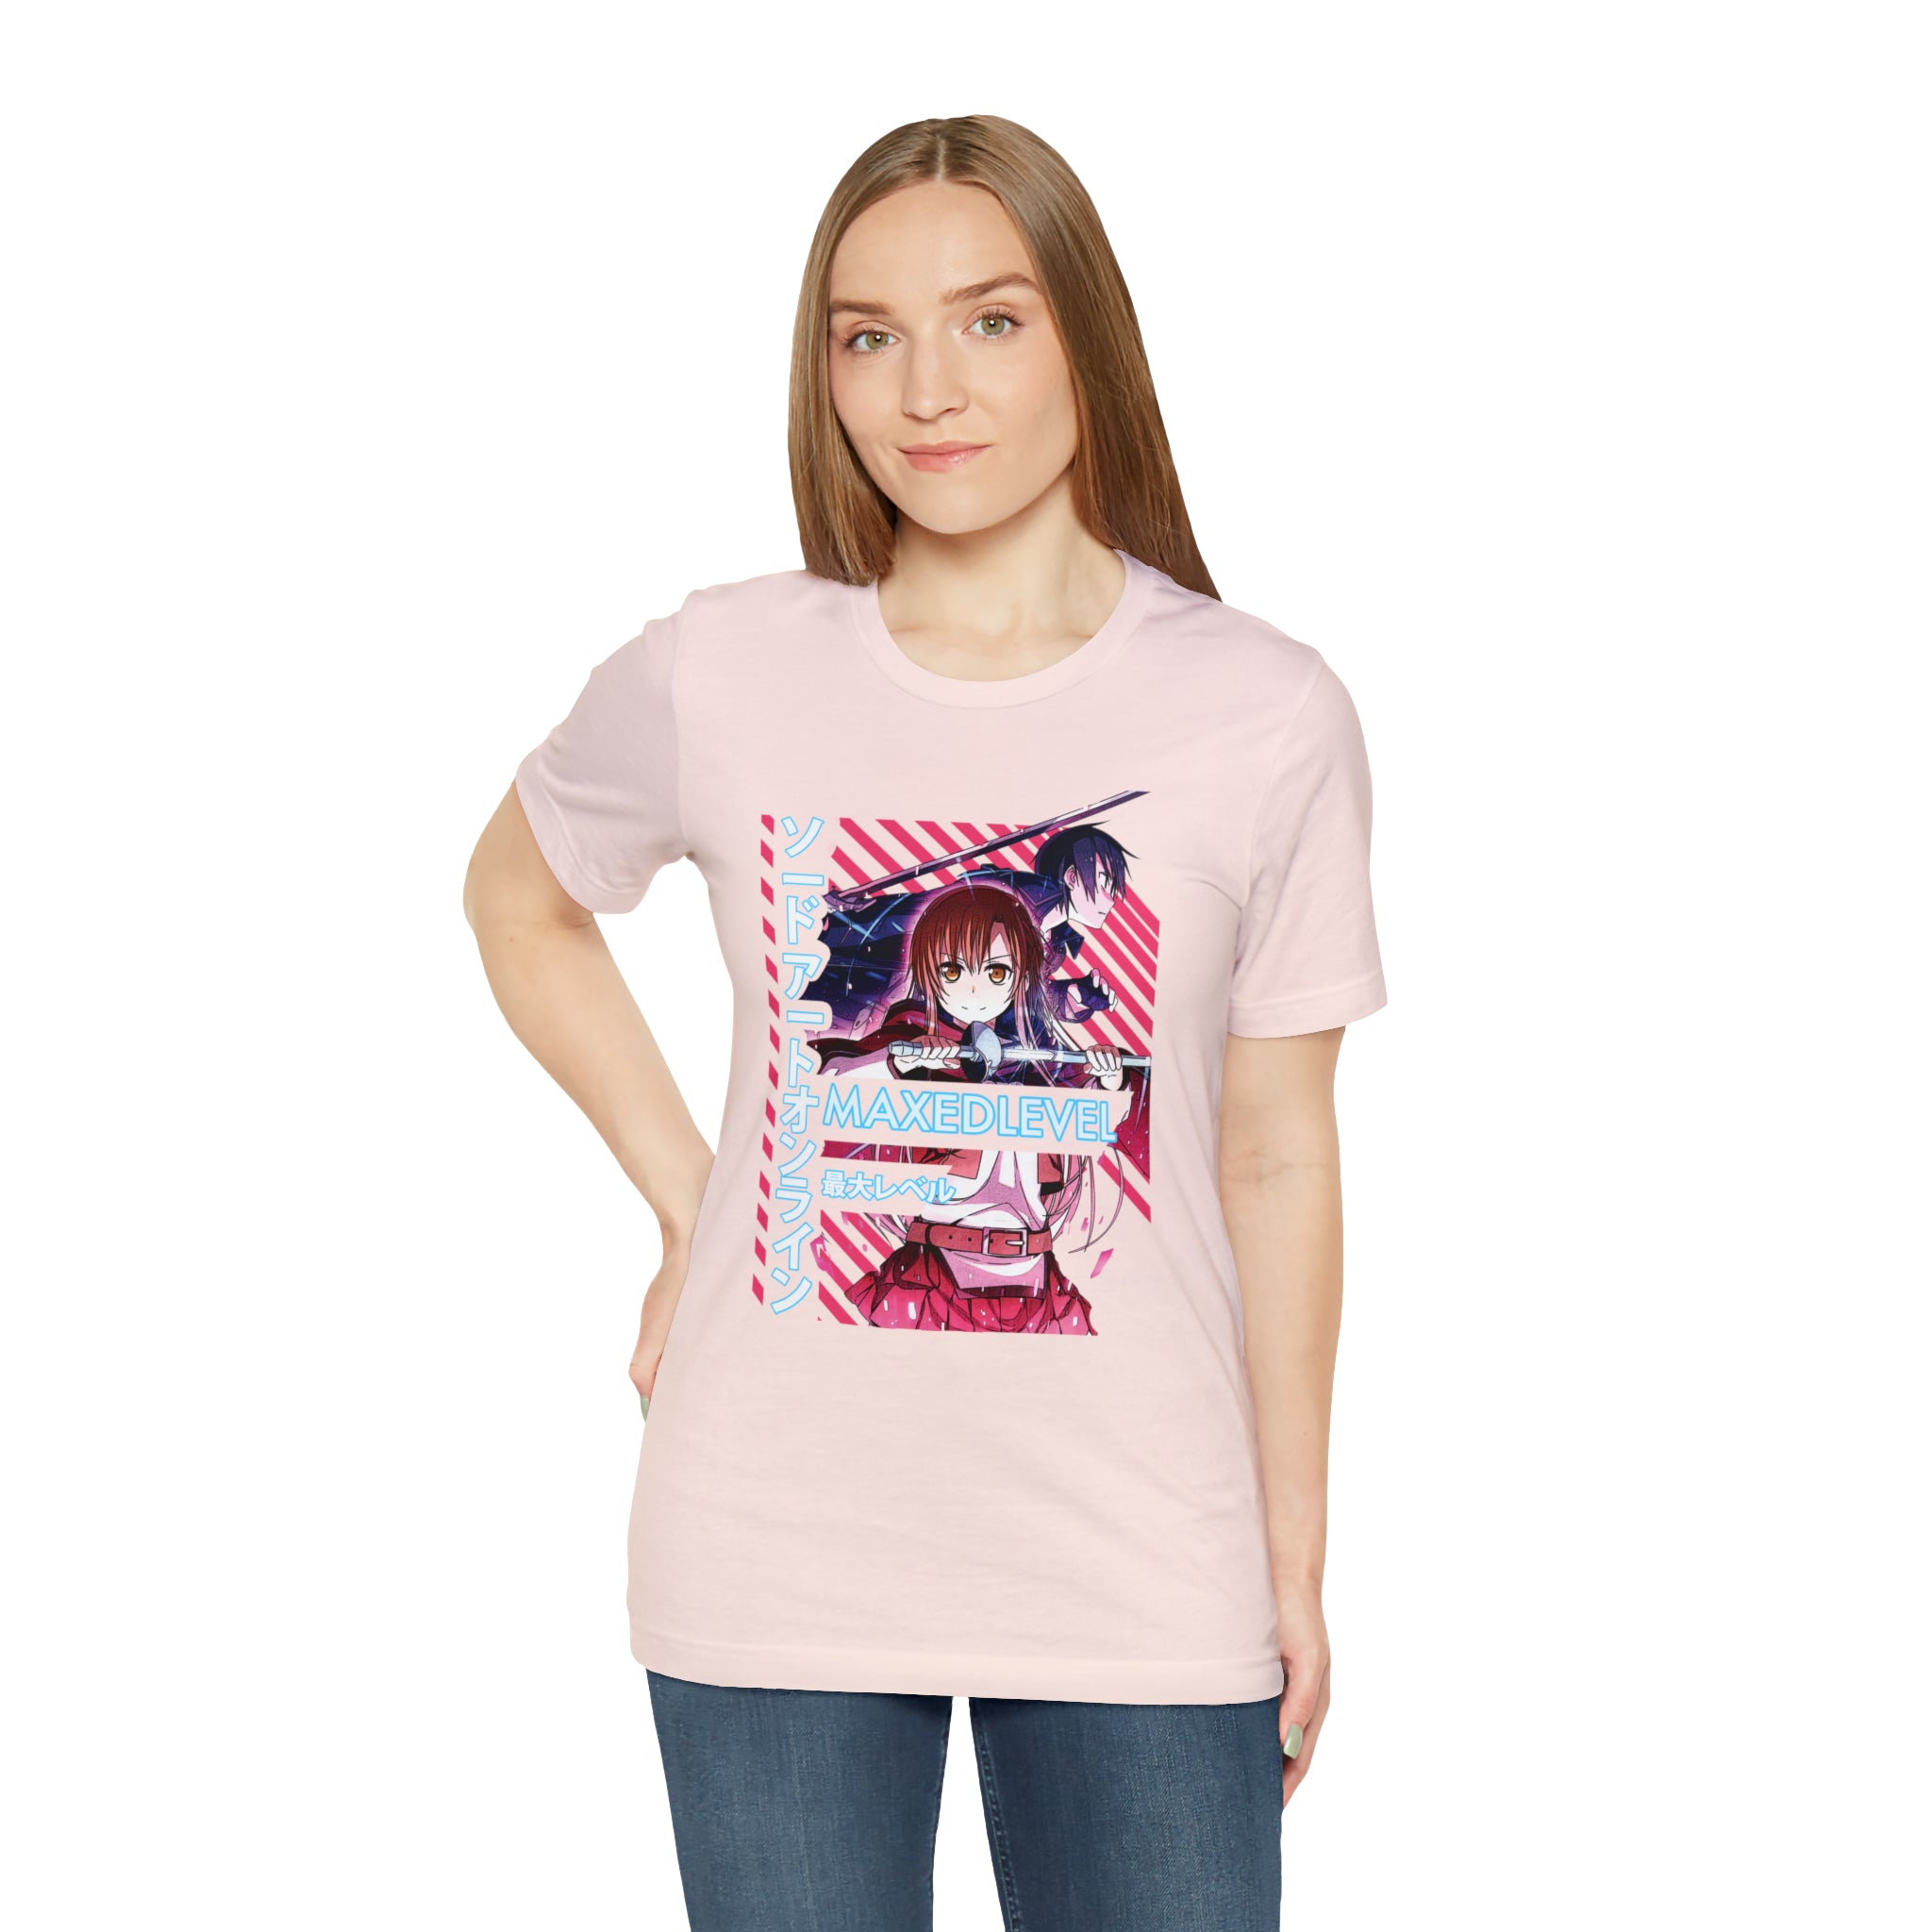 Asuna x Kirito T-shirt